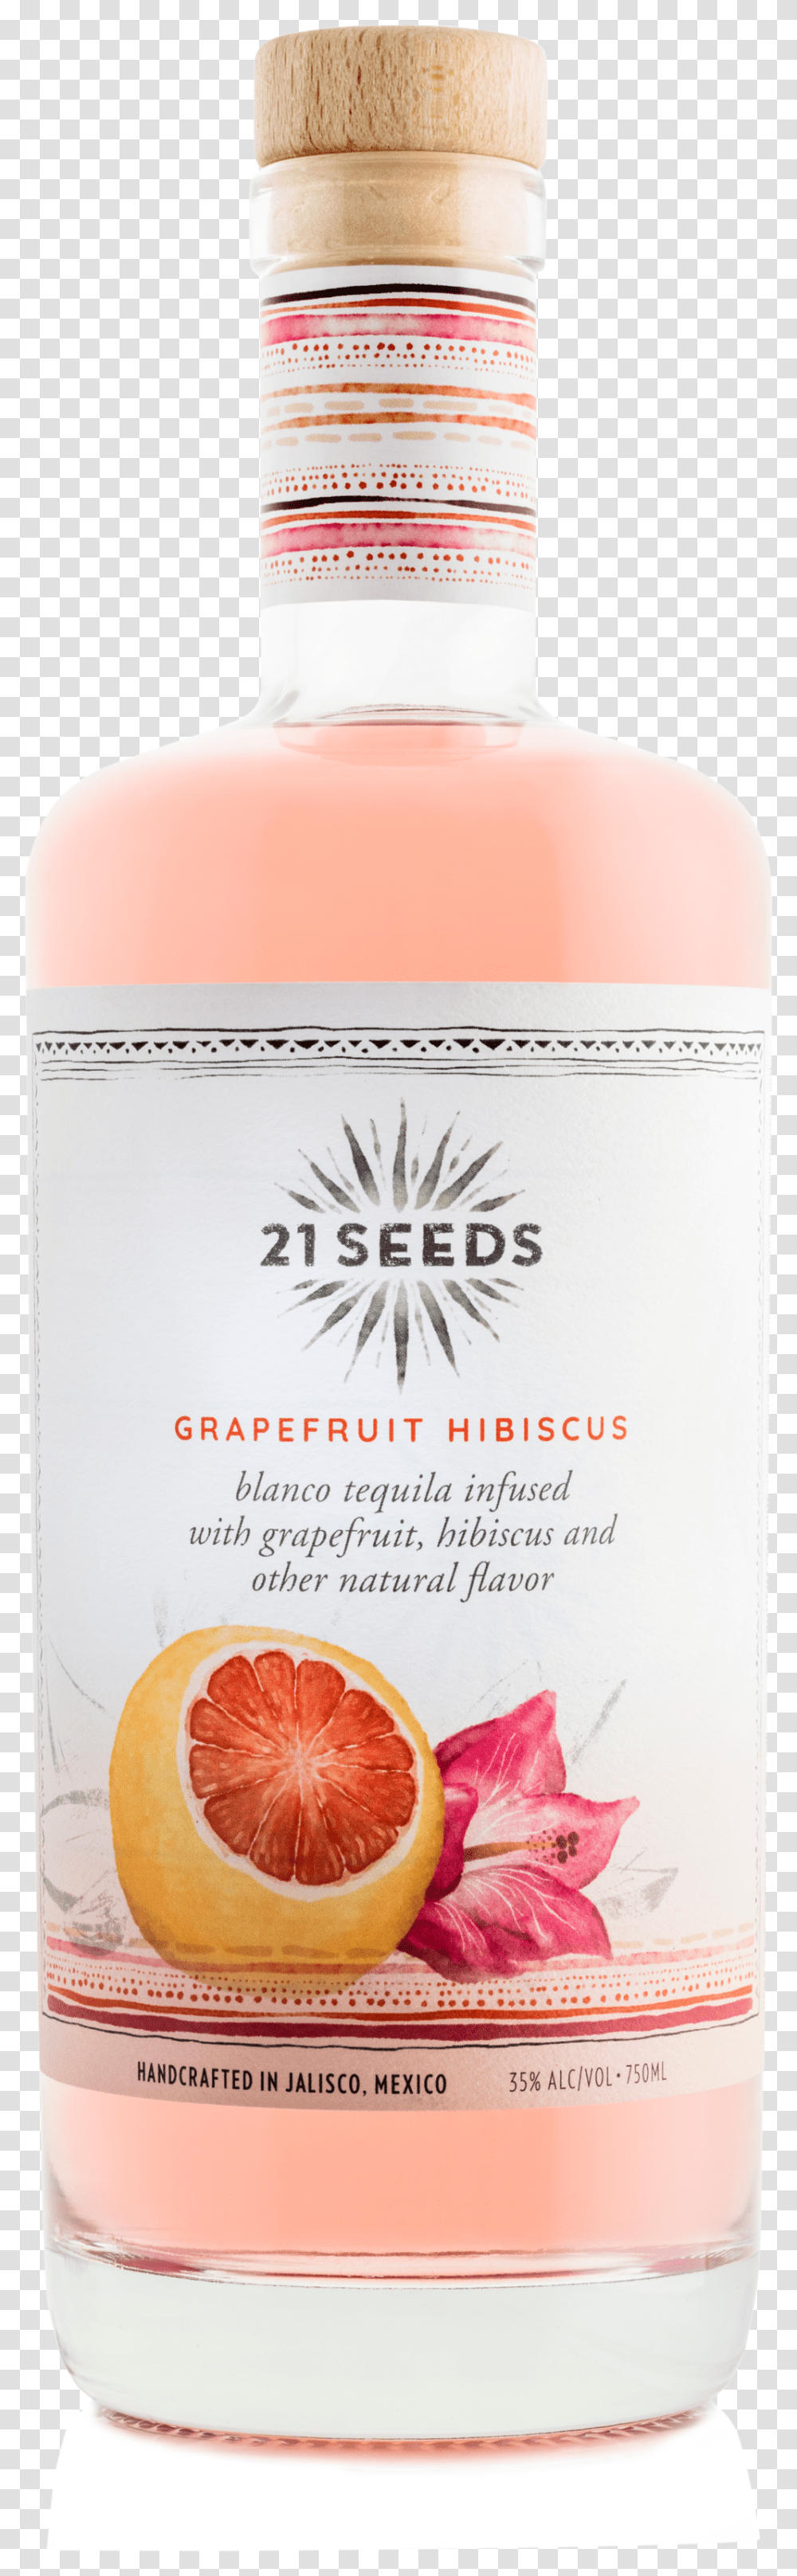 Grapefruit Hibiscus No Background 21 Seeds Tequila Grapfruit, Liquor, Alcohol, Beverage, Drink Transparent Png